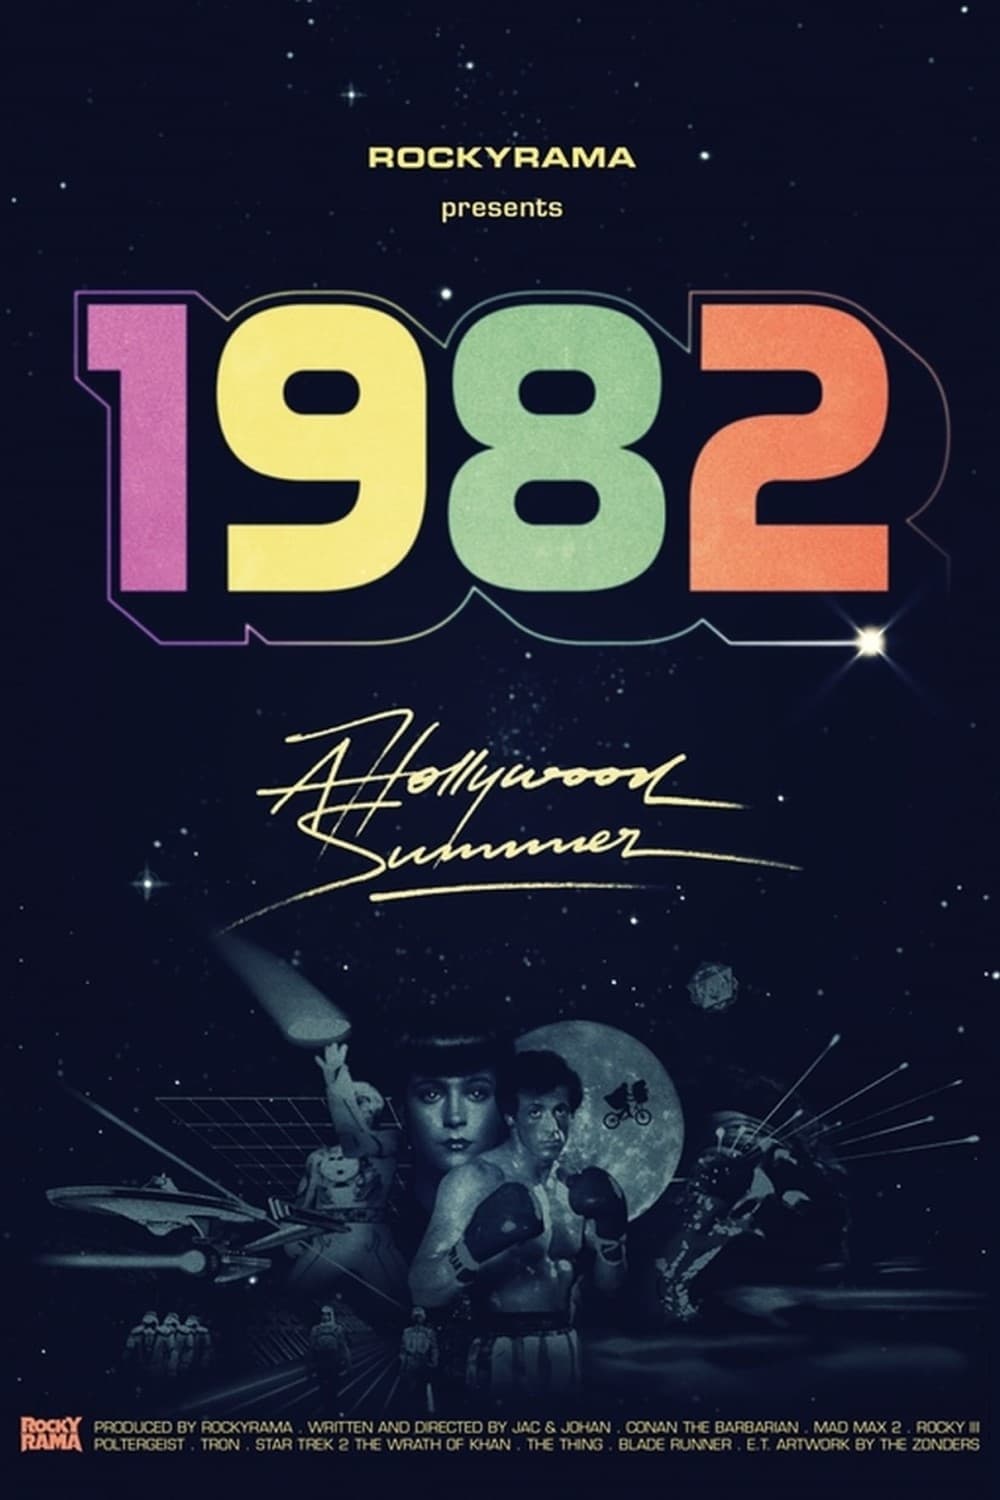 1982: Hollywood Summer